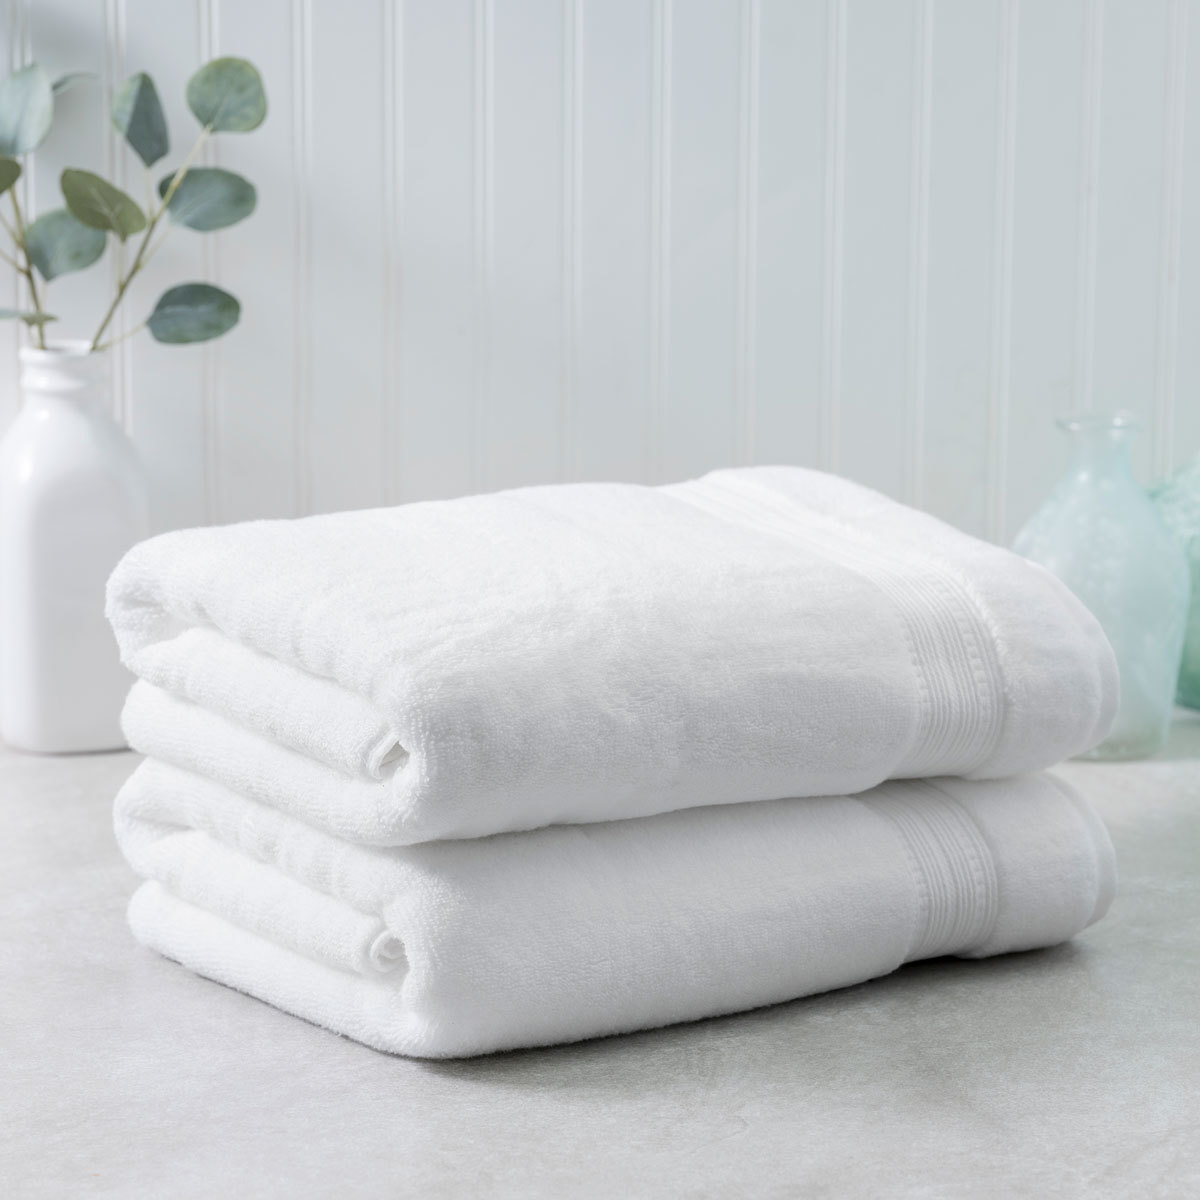 Charisma white bath towel